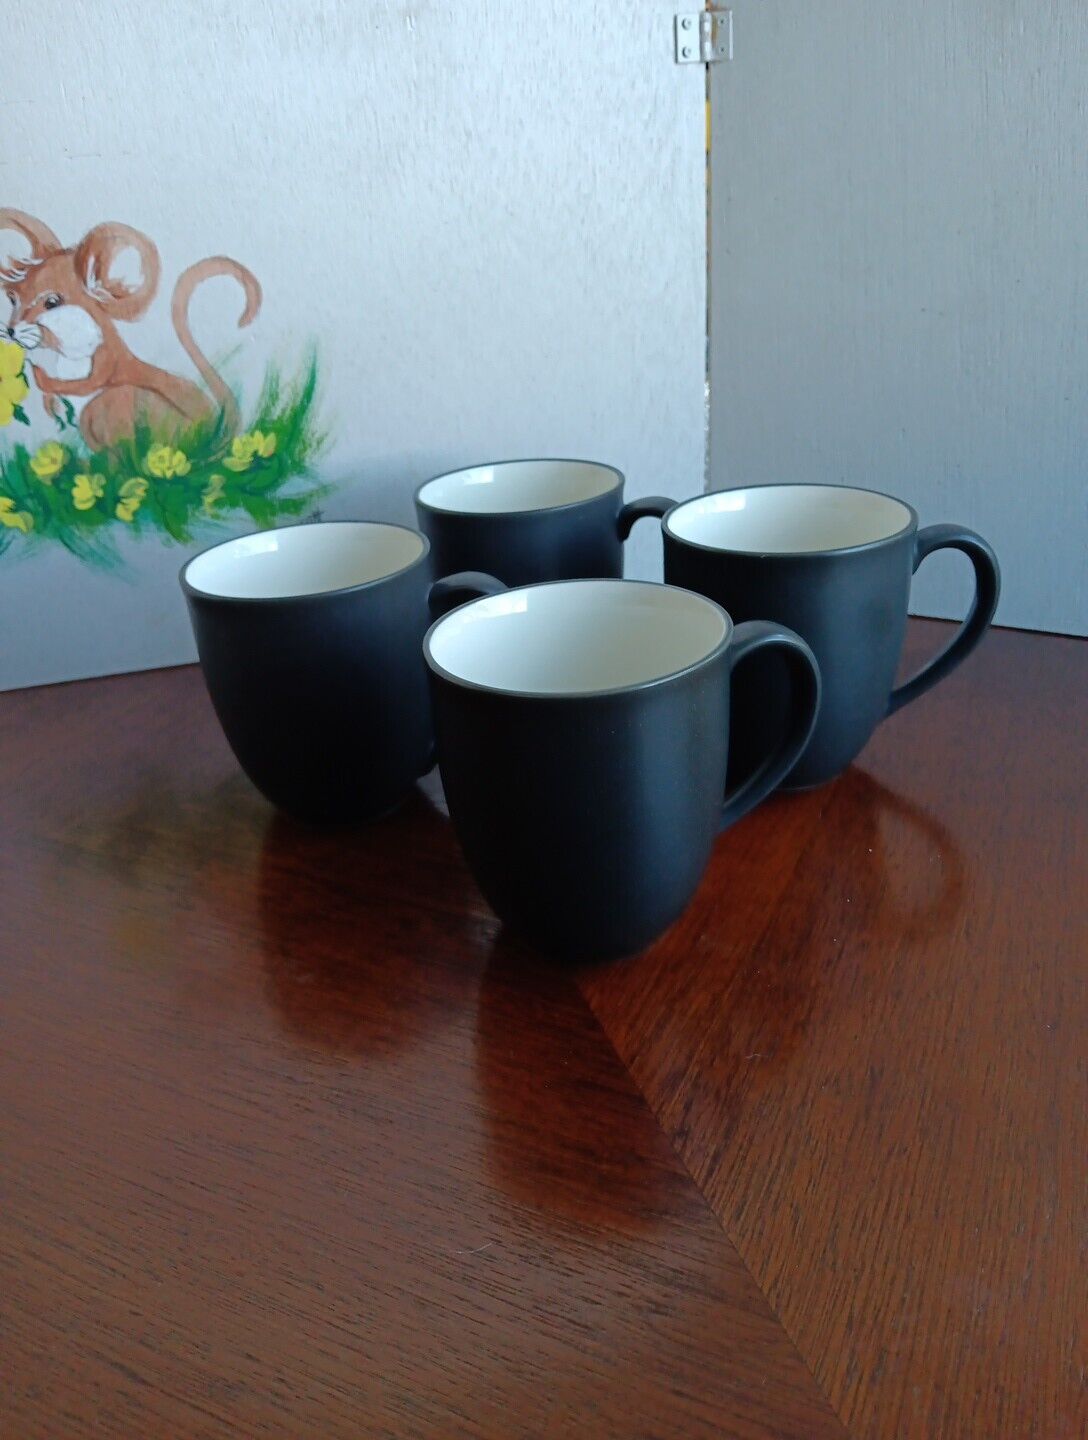 Lot of 4 Noritake Colorwave #8034 Graphite Mugs Stoneware Coffee Cups Set 12 oz